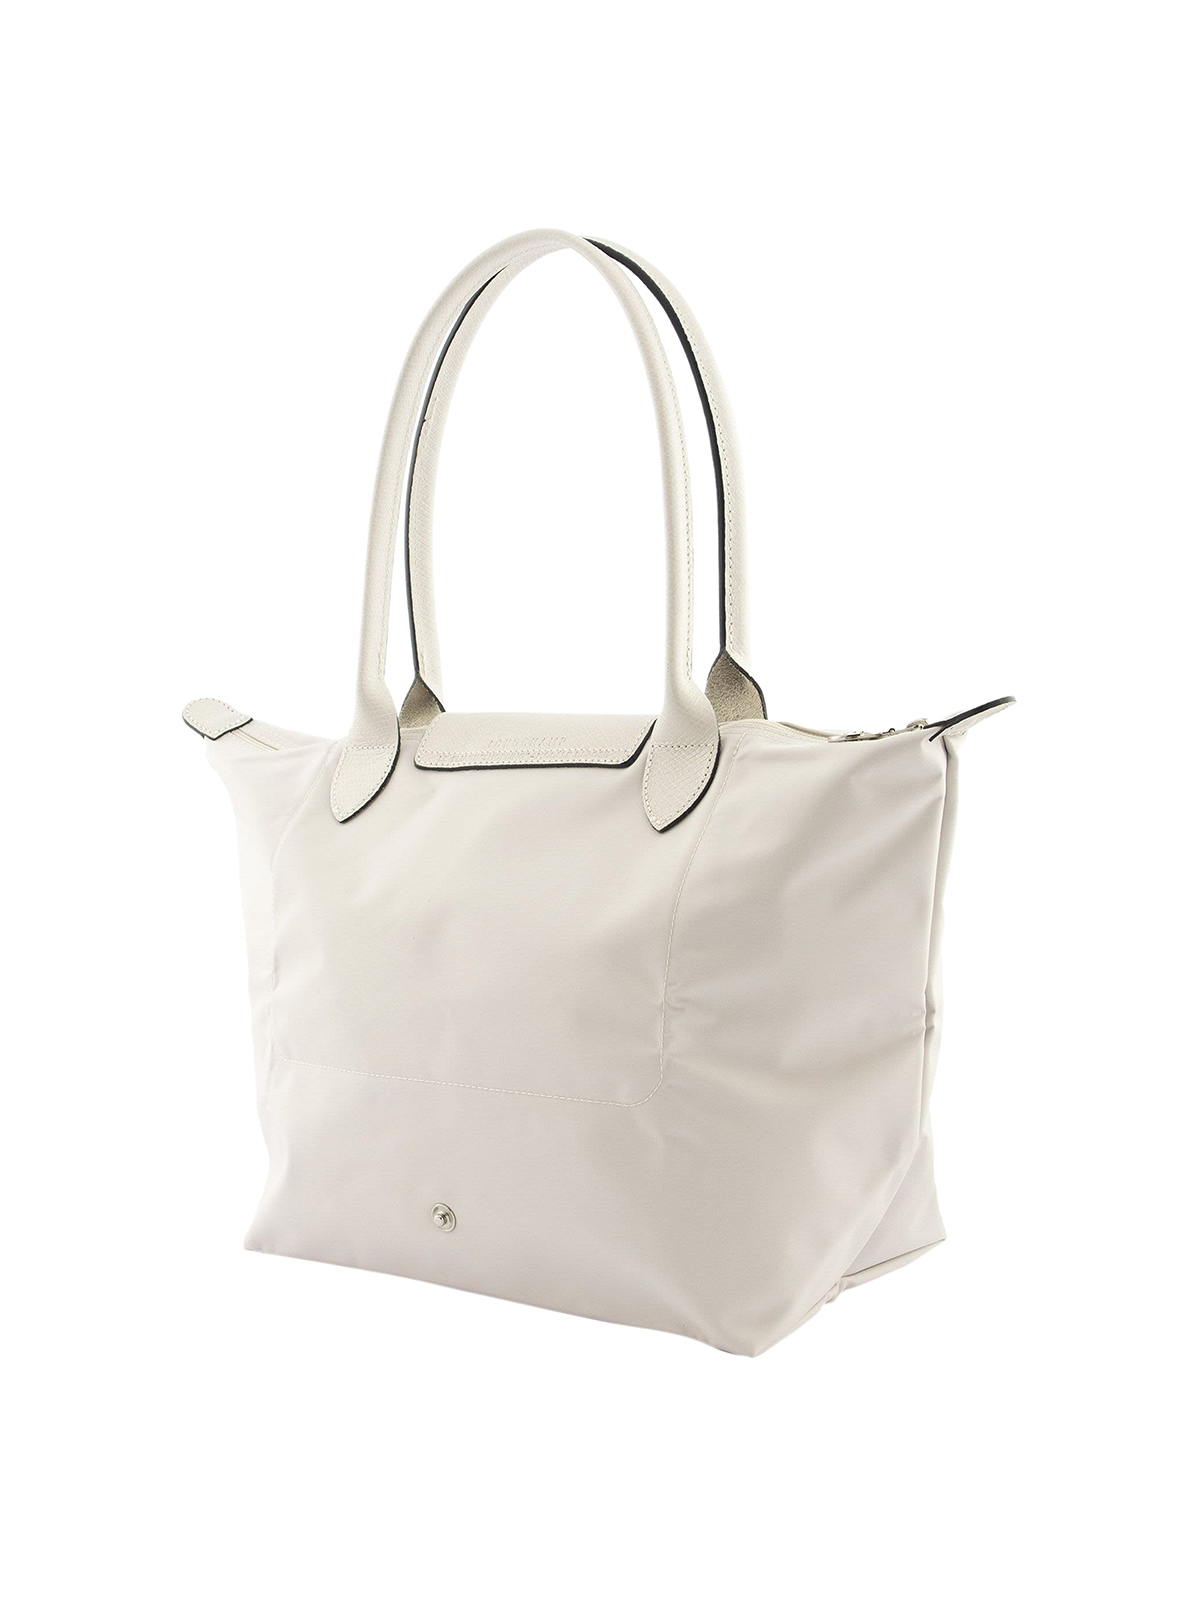 Totes bags Longchamp - Le Pliage Club small tote - 2605619337